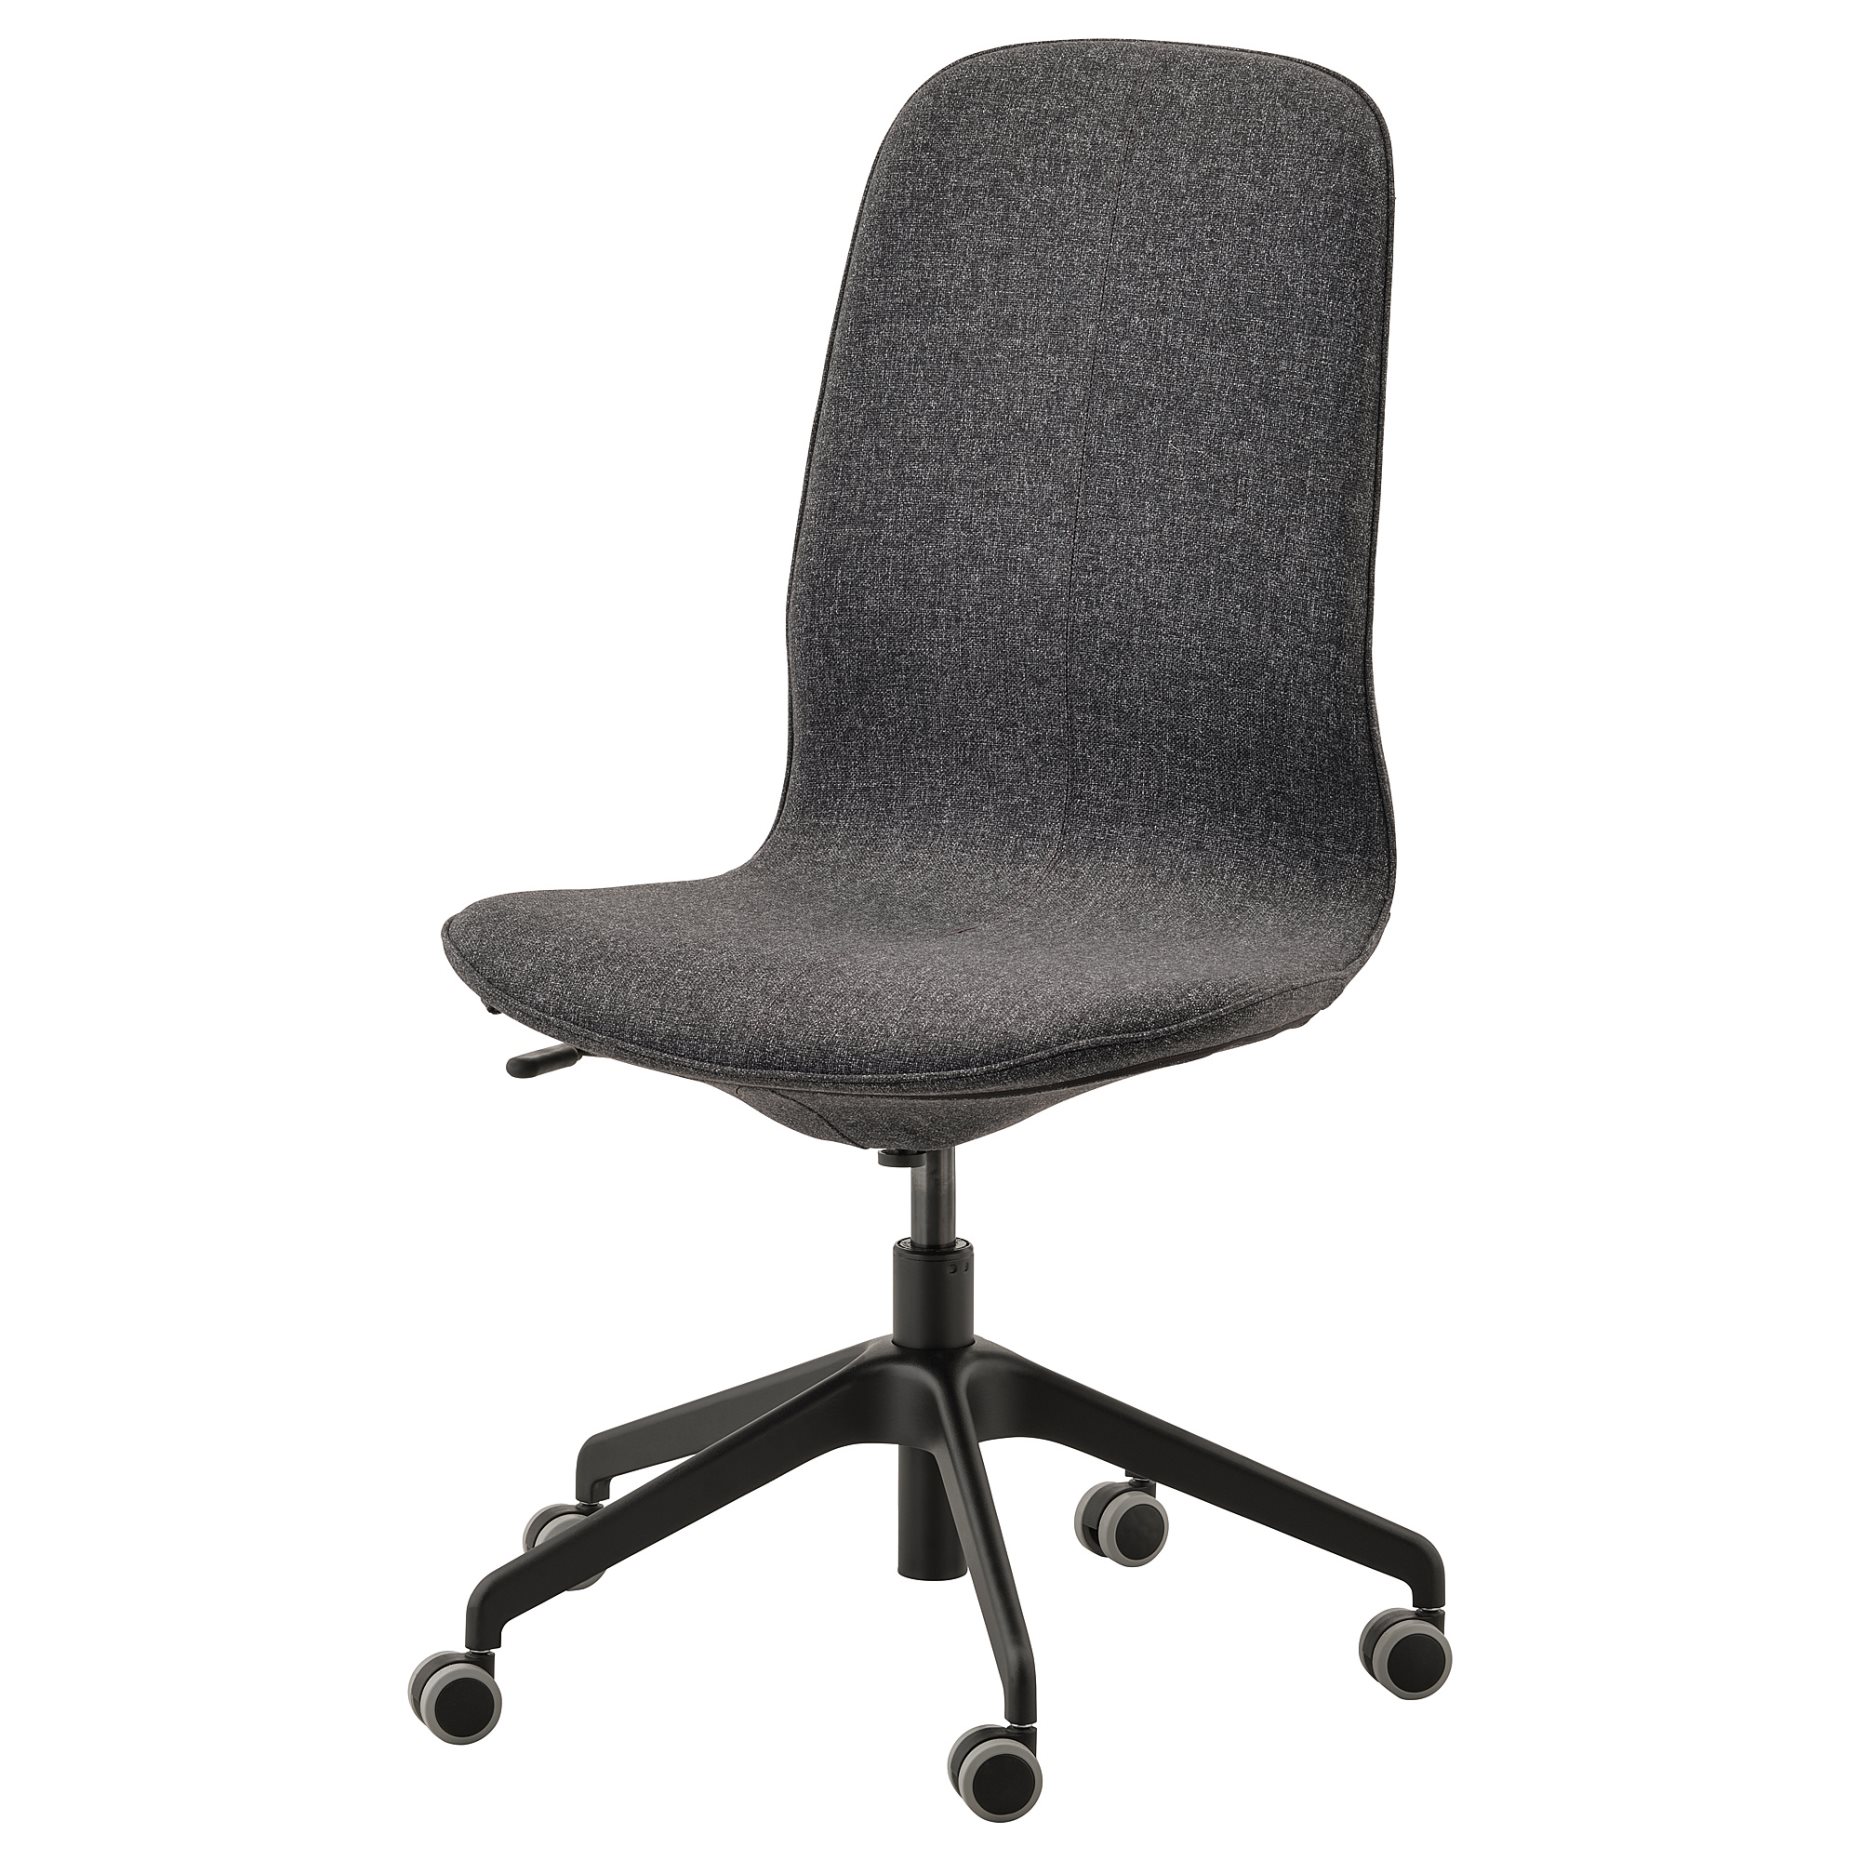 LÅNGFJÄLL, swivel chair, 791.776.42